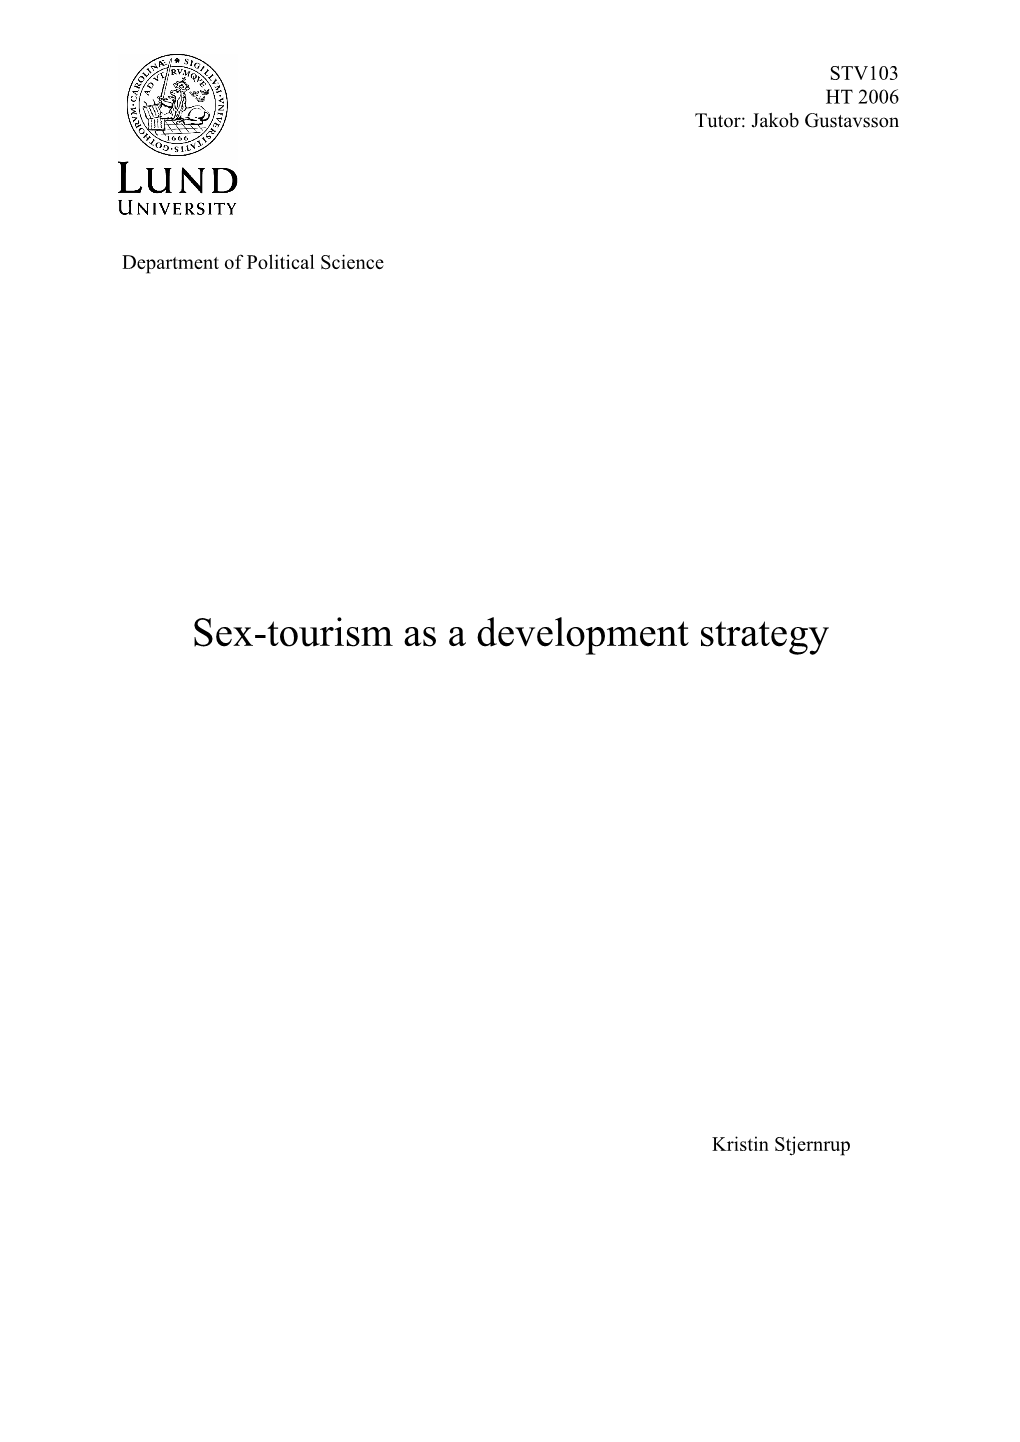 Sex-Tourism As a Development Strategy